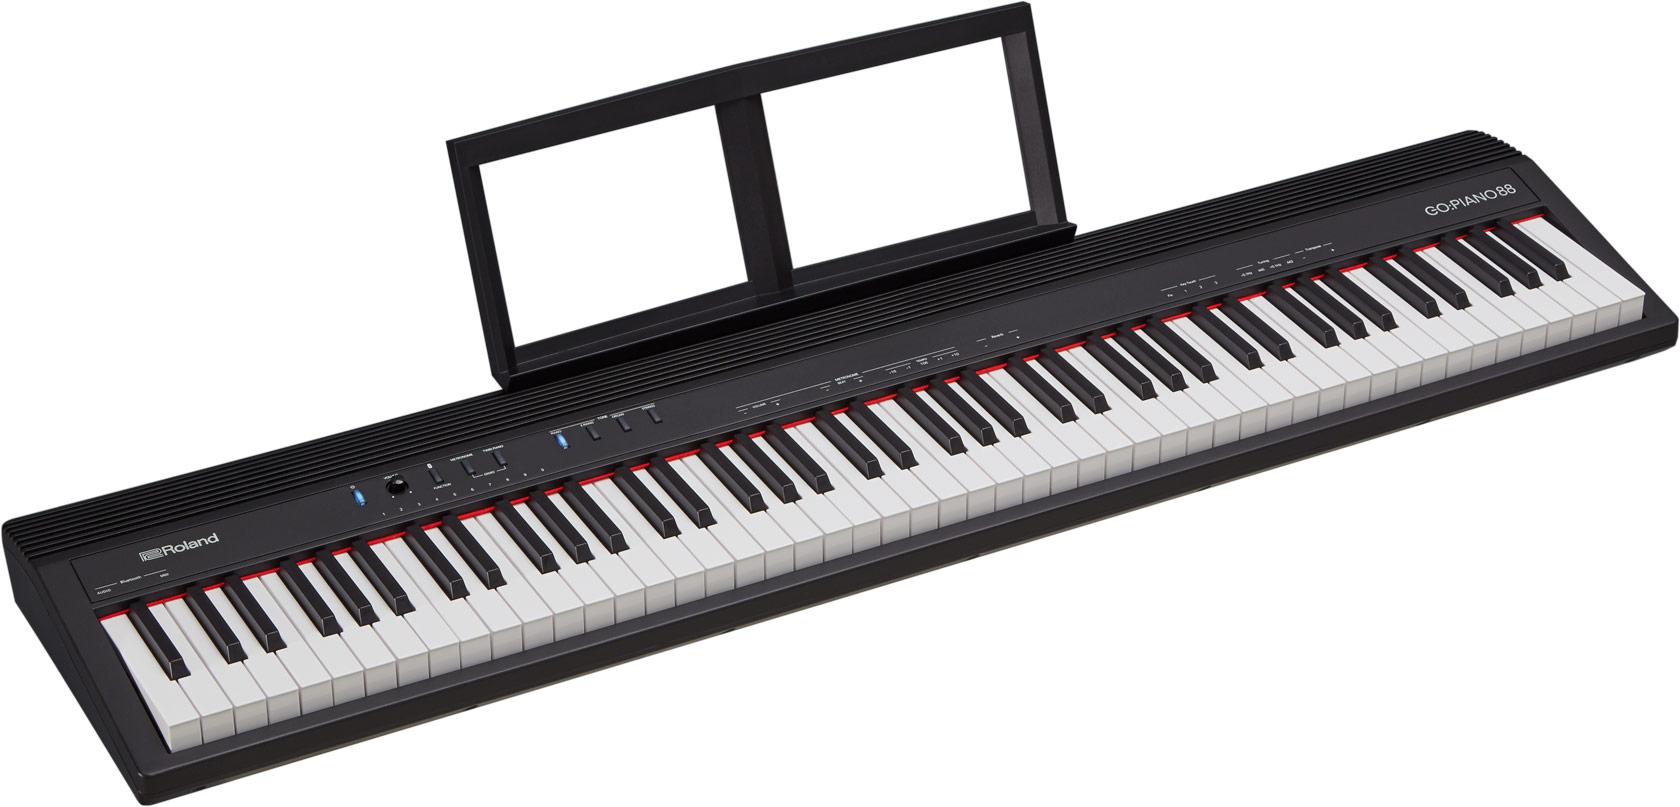 Roland Go:piano 88 - Portable digital piano - Variation 1